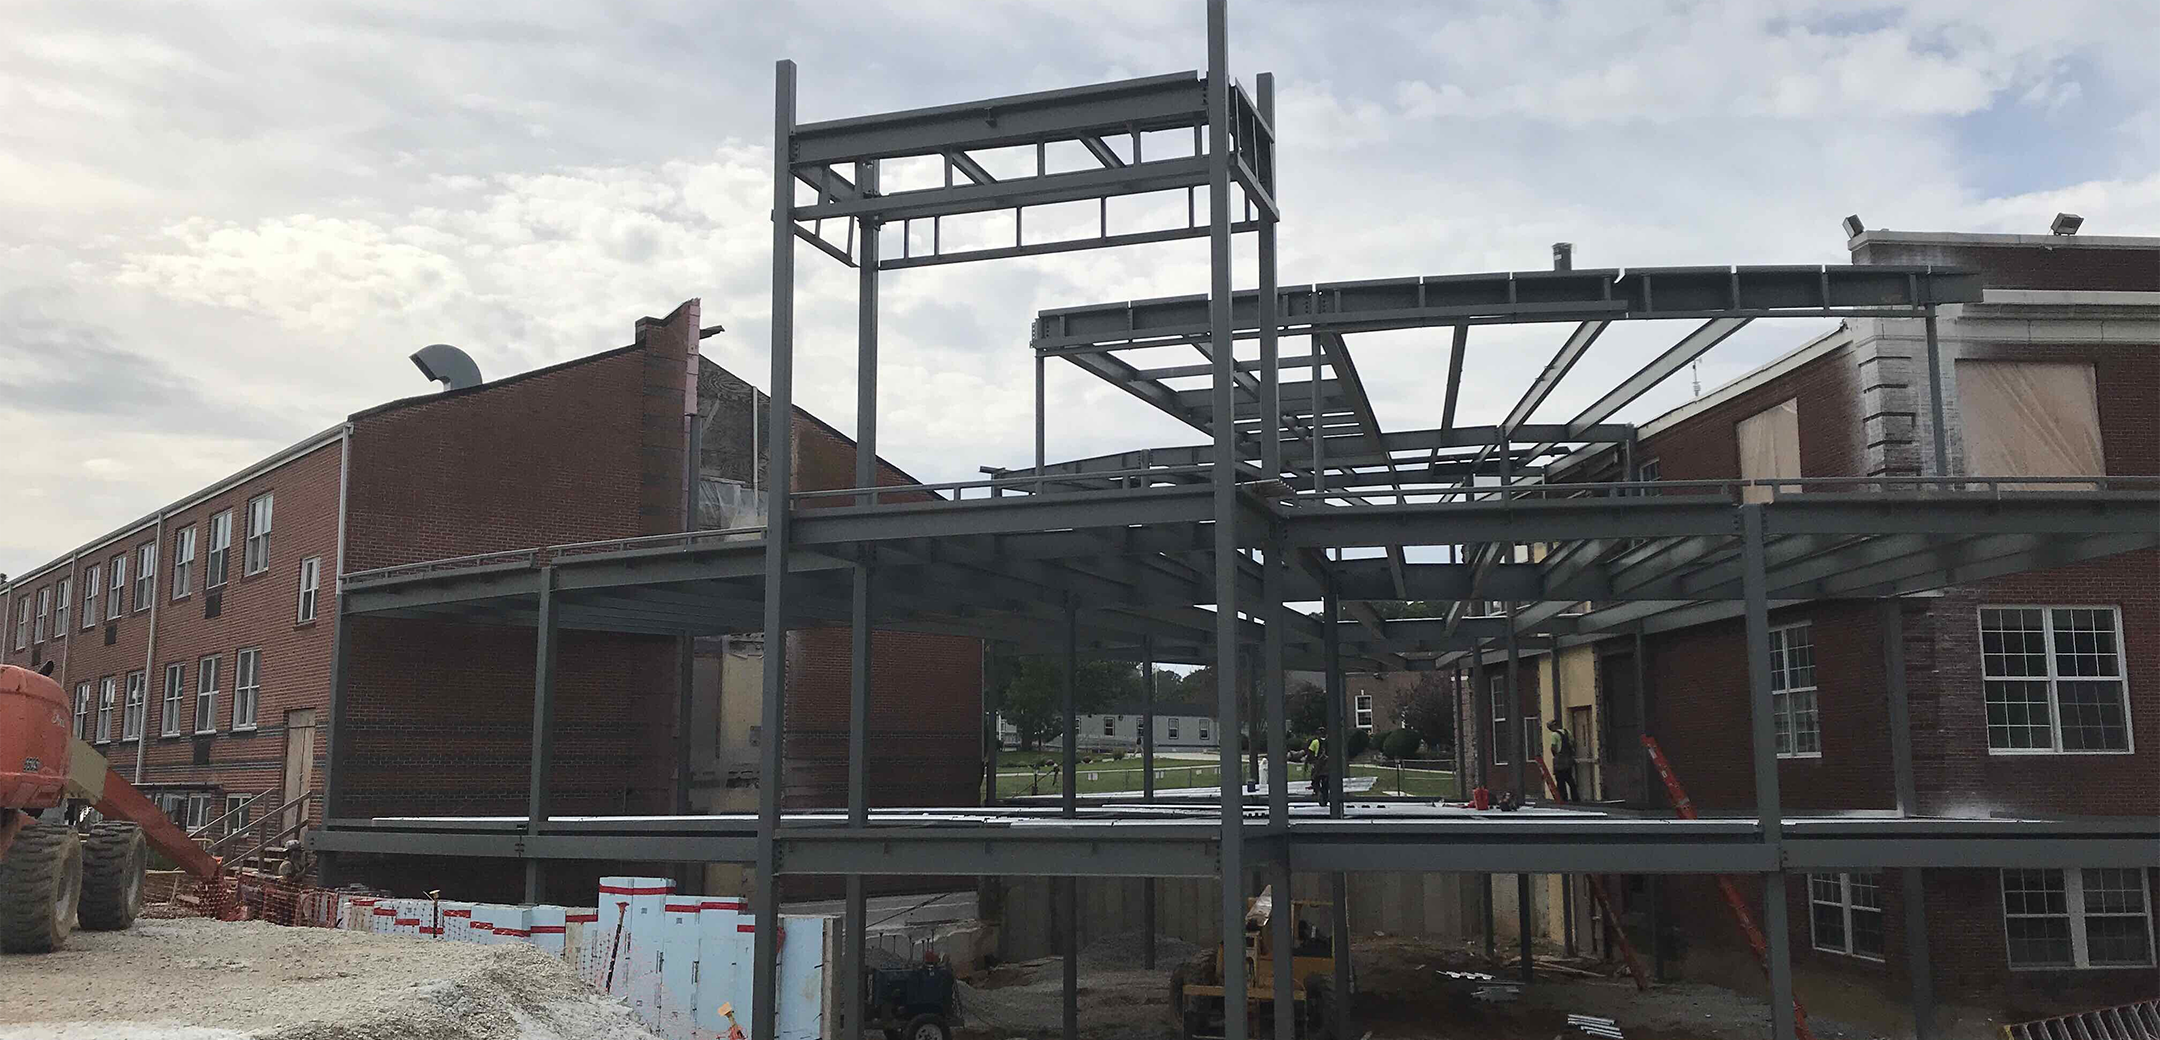 Malvern Prep school building during framework building, showcasing the metal beam barebones structure.